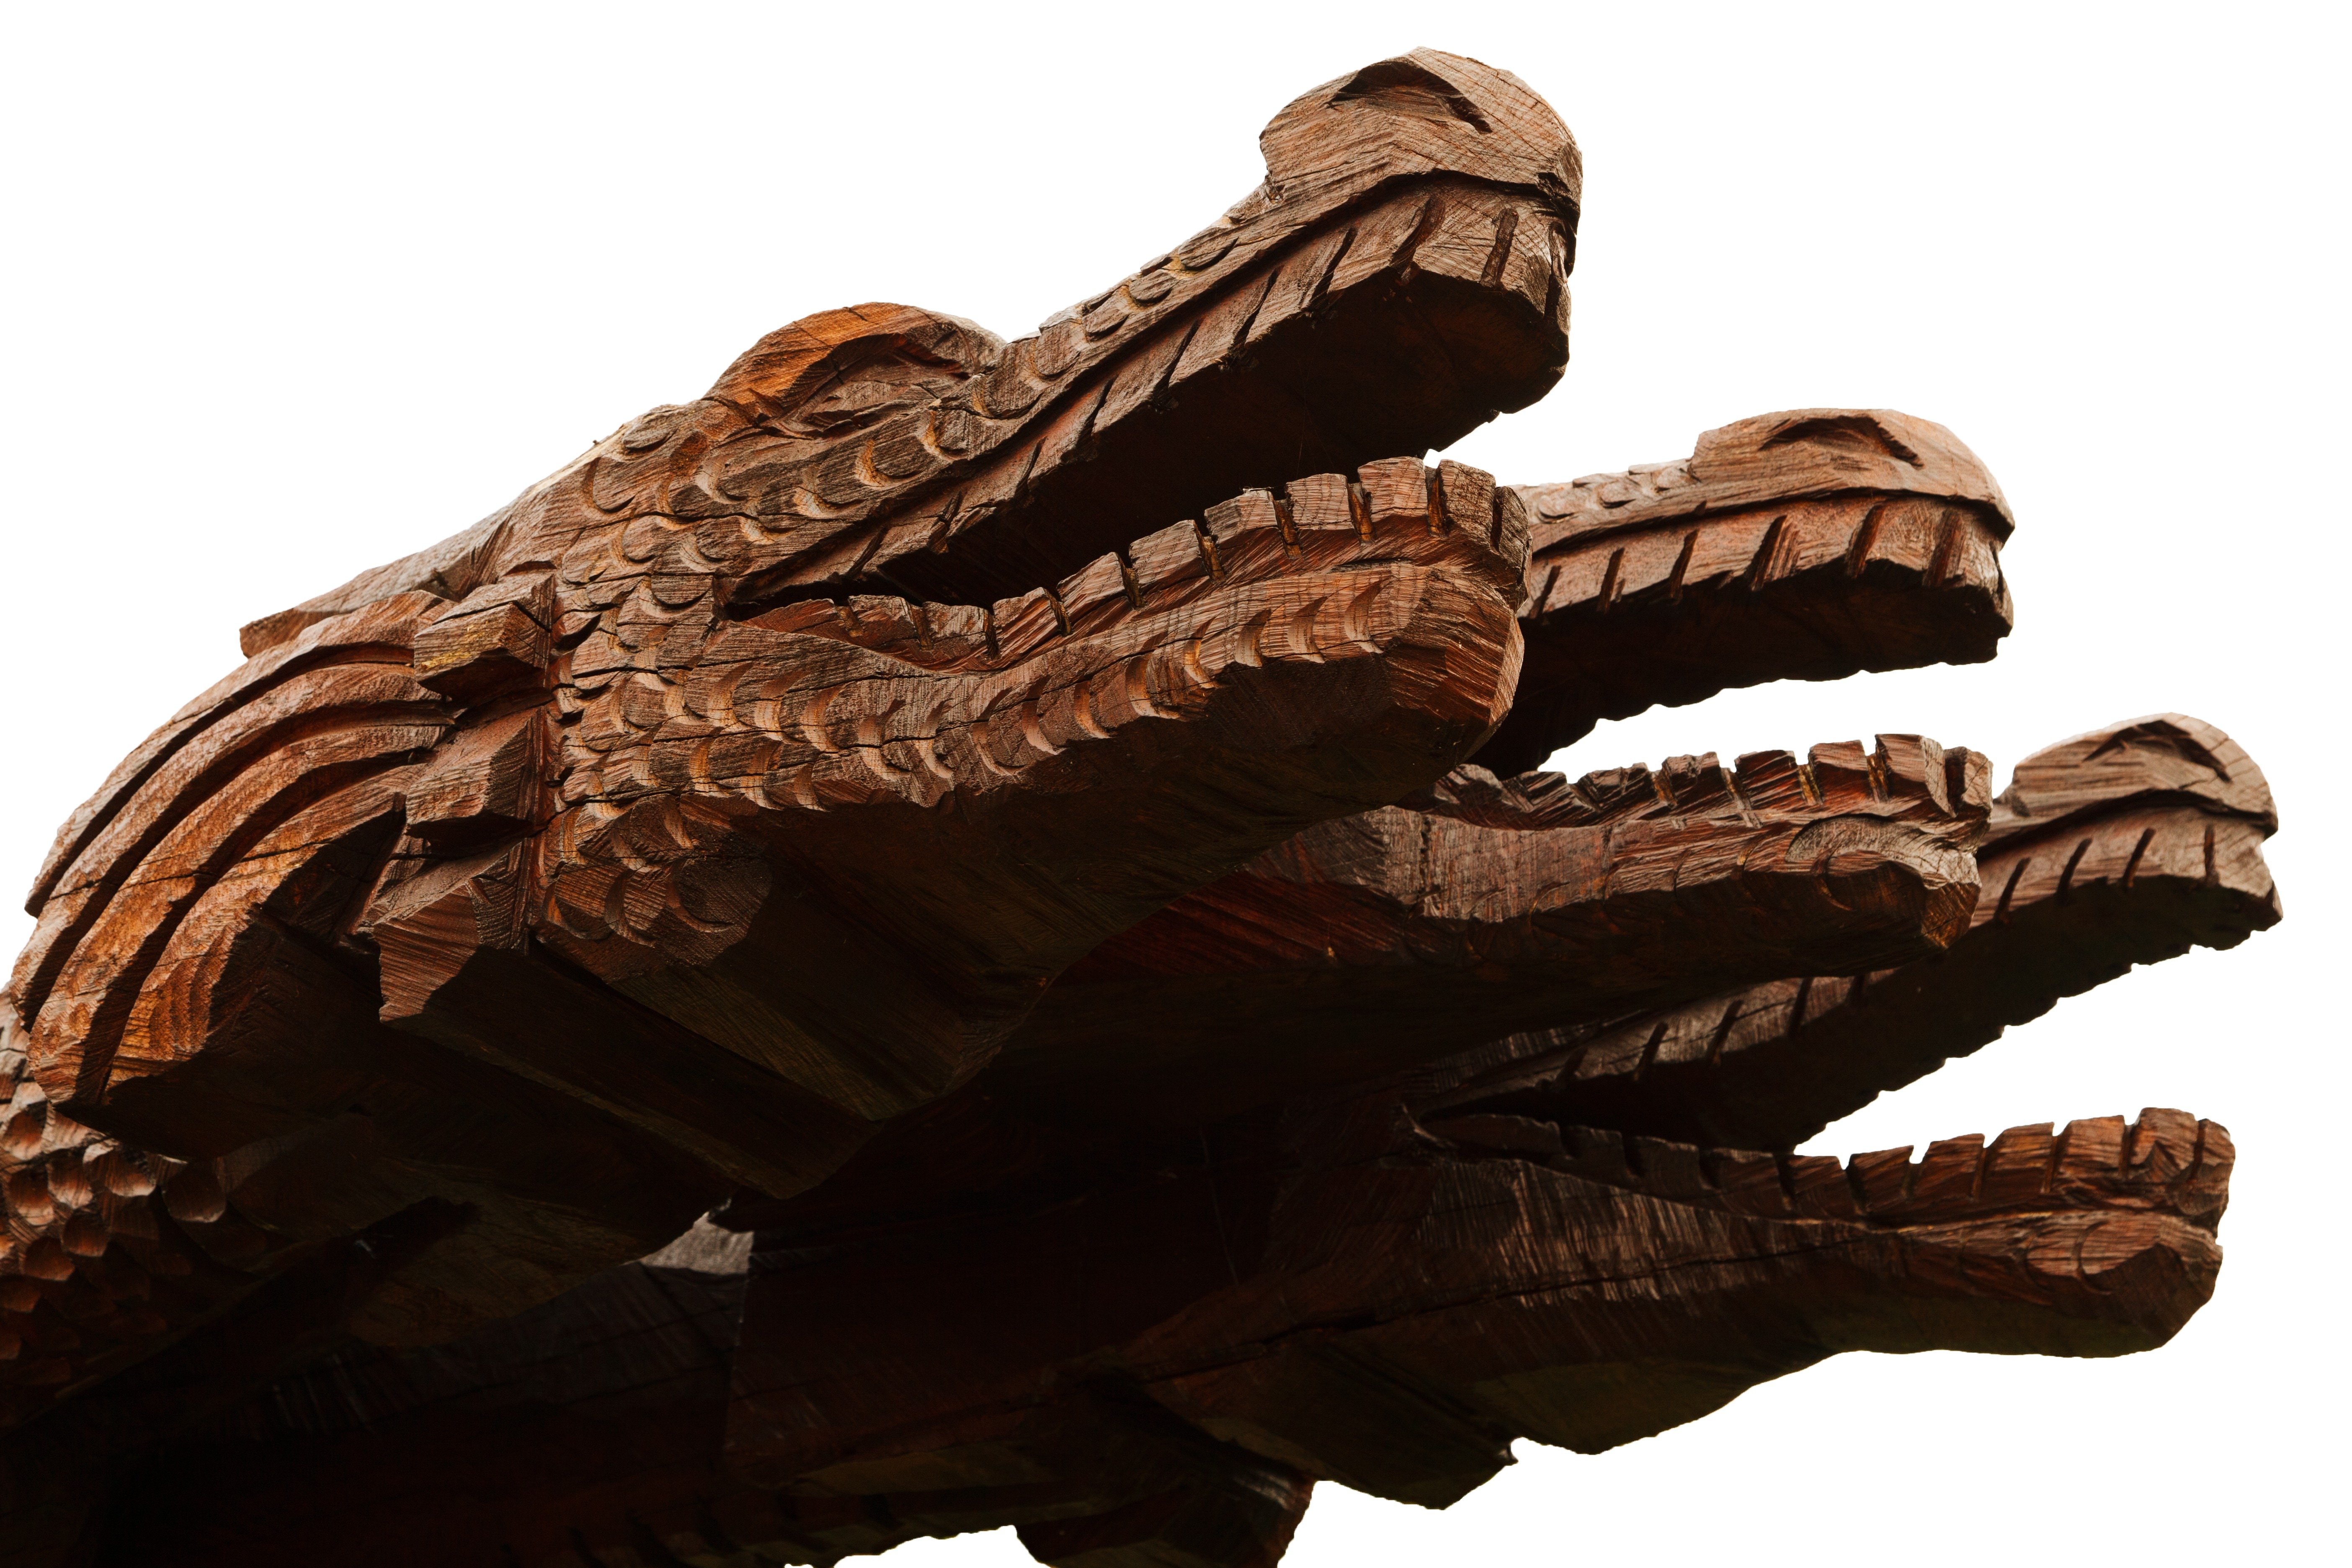 three headed dragon wooden sculpture